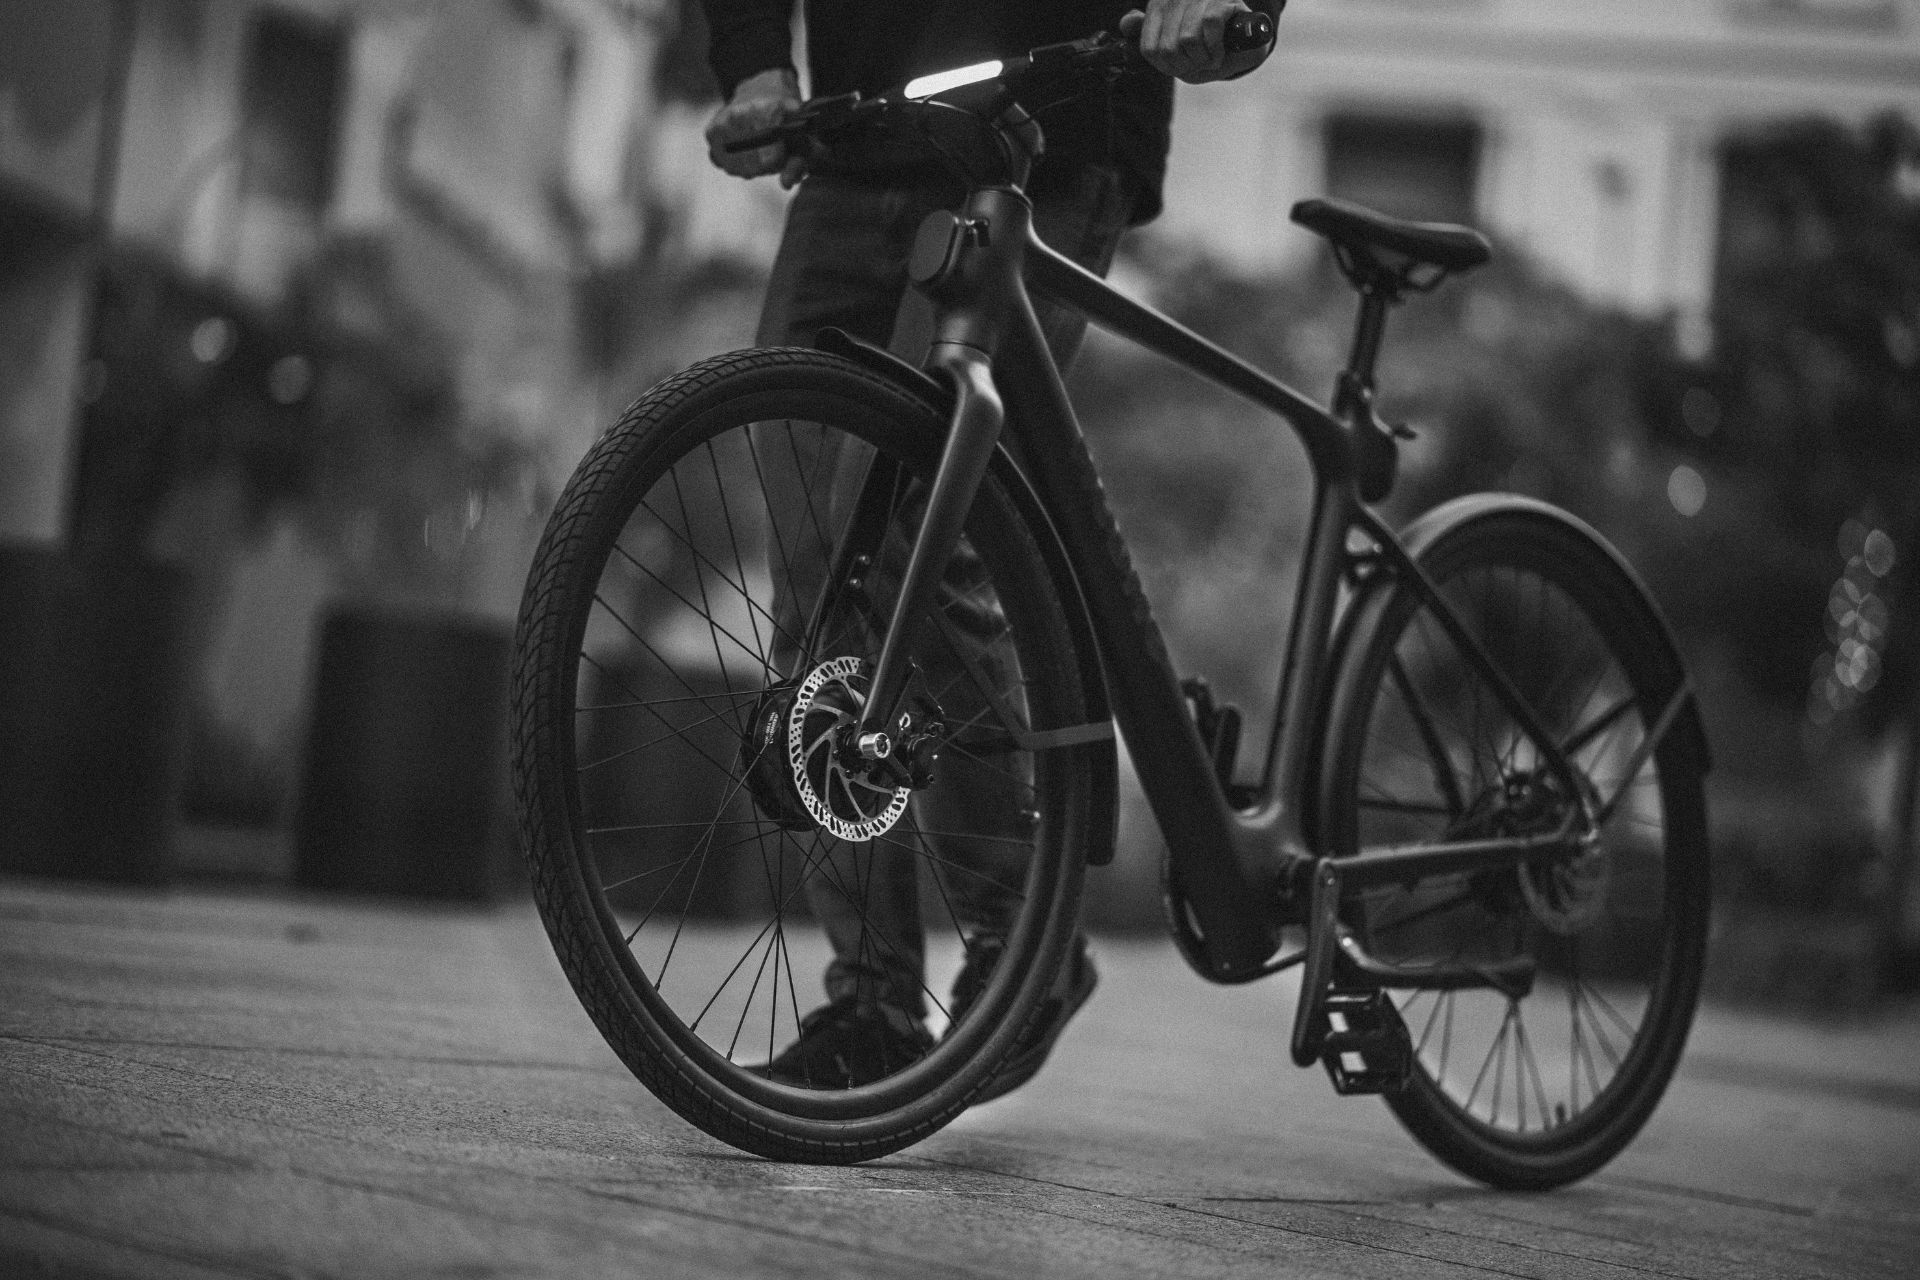 Modmo Saigon+ Electric Bicycle - RRP £2800 - Size S (Rider: 140-155cm) - Image 9 of 19